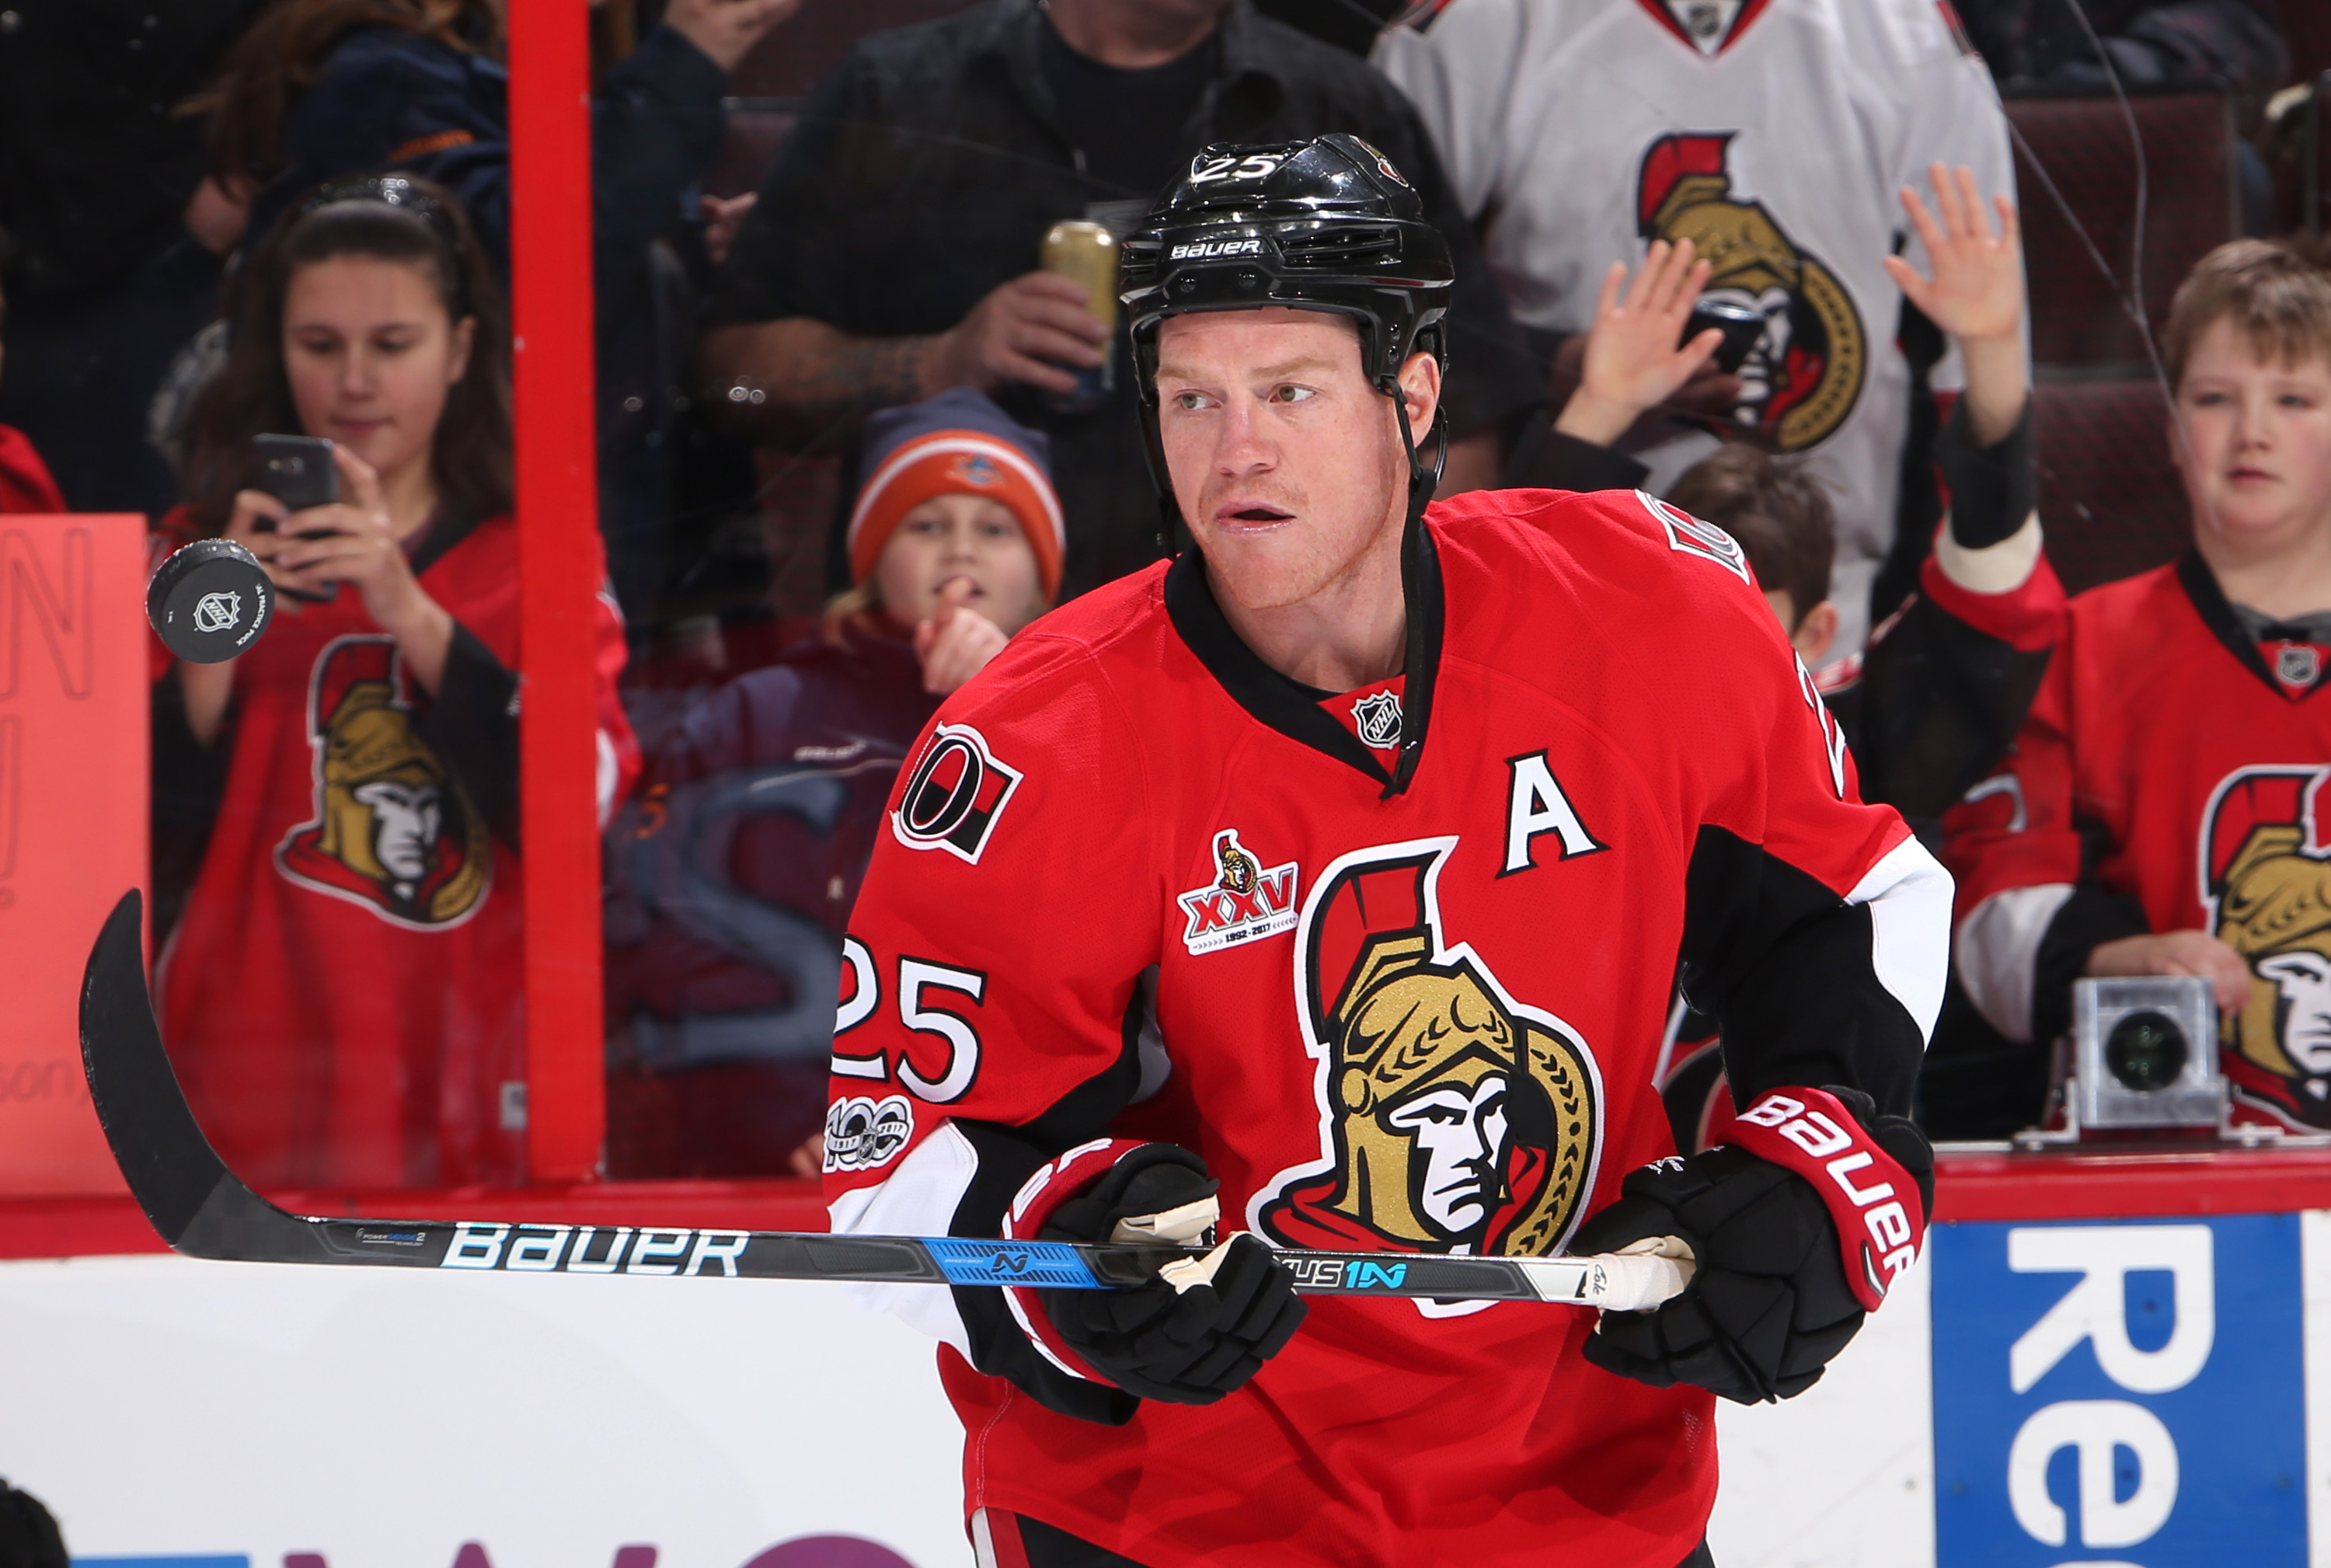 Ottawa Senators: Senators retiring Chris Neil's number 25 jersey